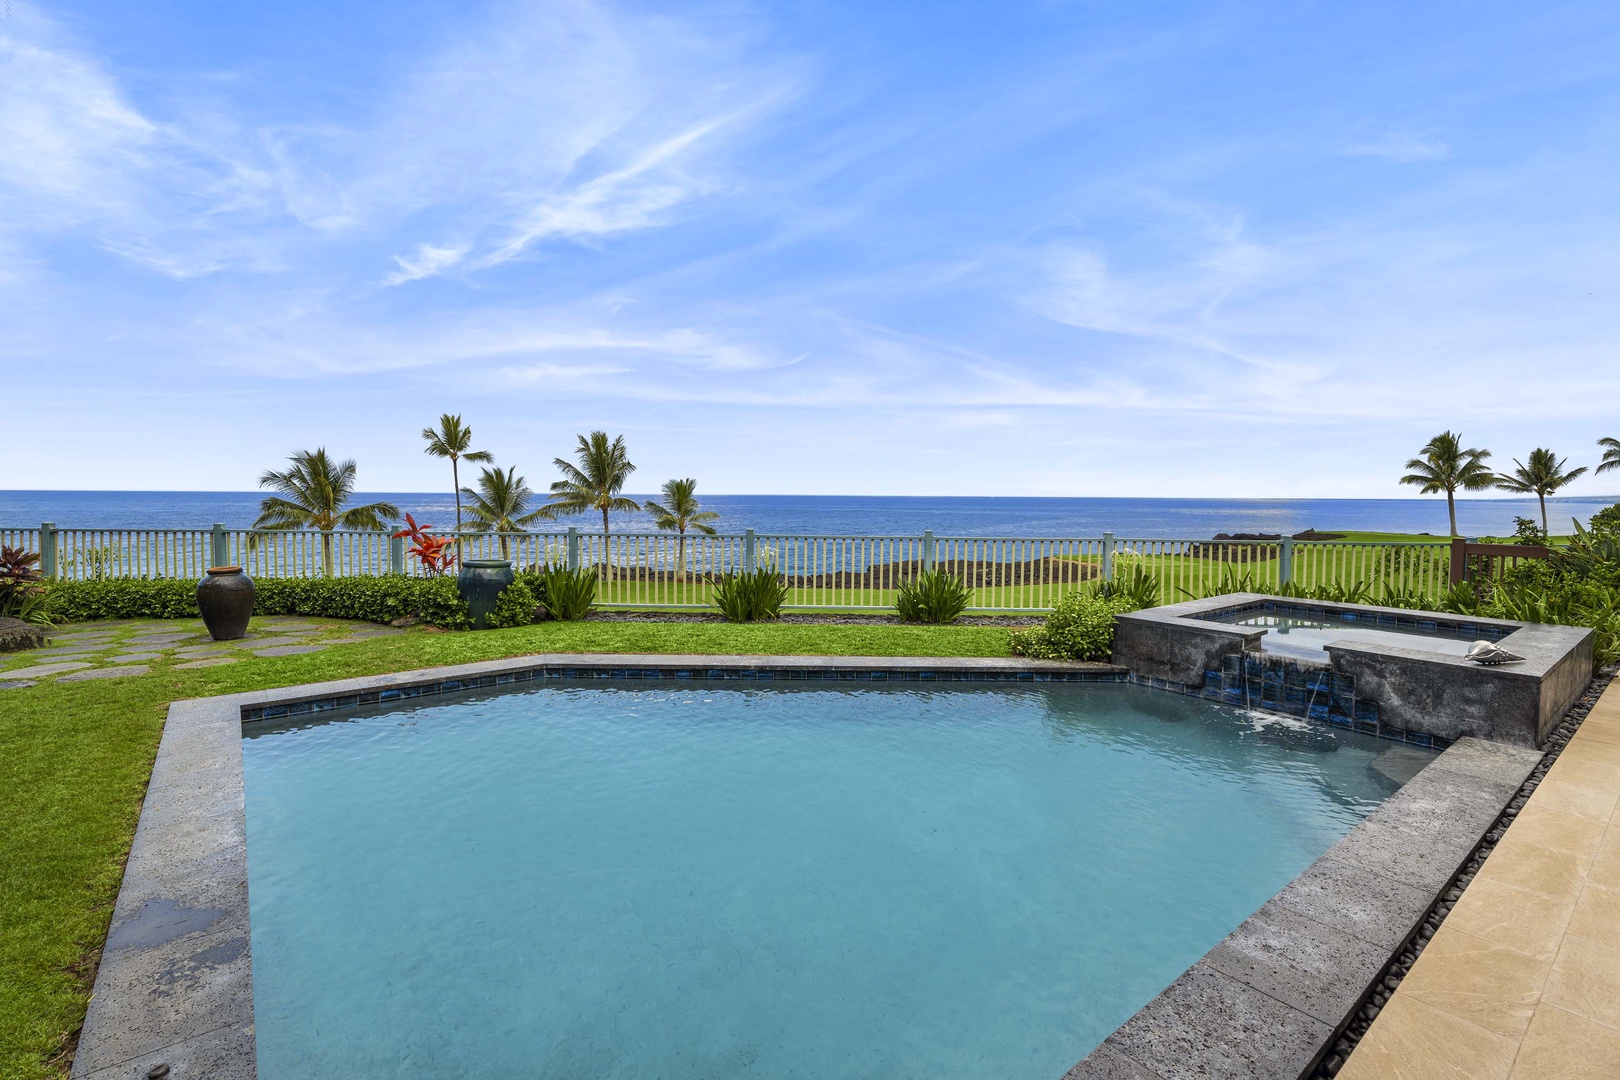 Kailua Kona Vacation Rentals, Holua Kai #20 - Spacious pool in the private back yard